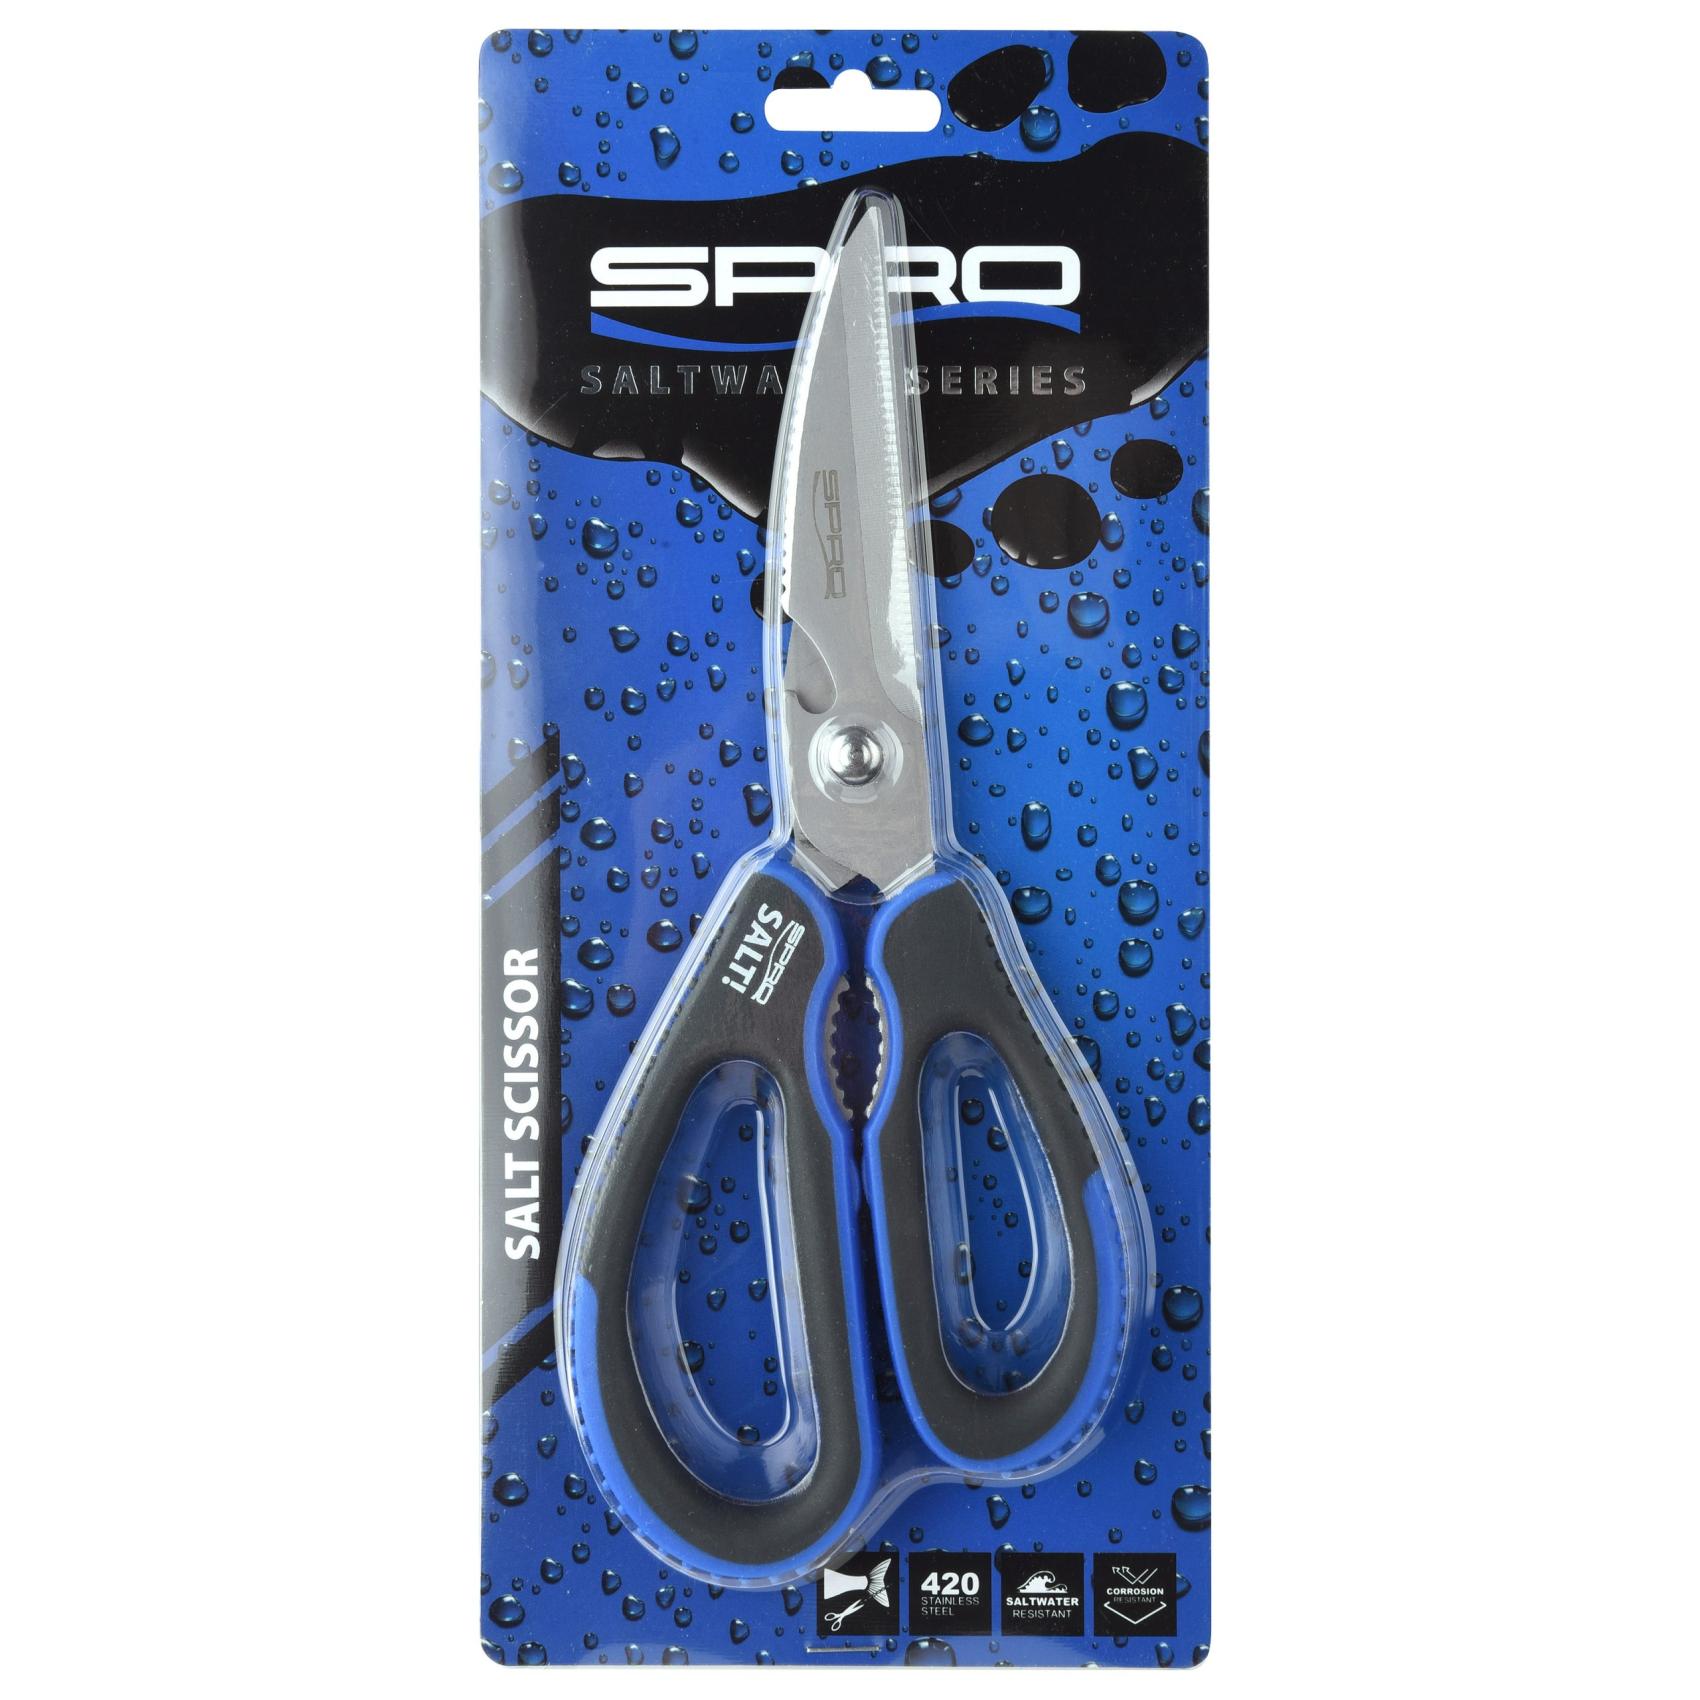 SALT! Scissors - SUS420 Stainl. Steel Blades